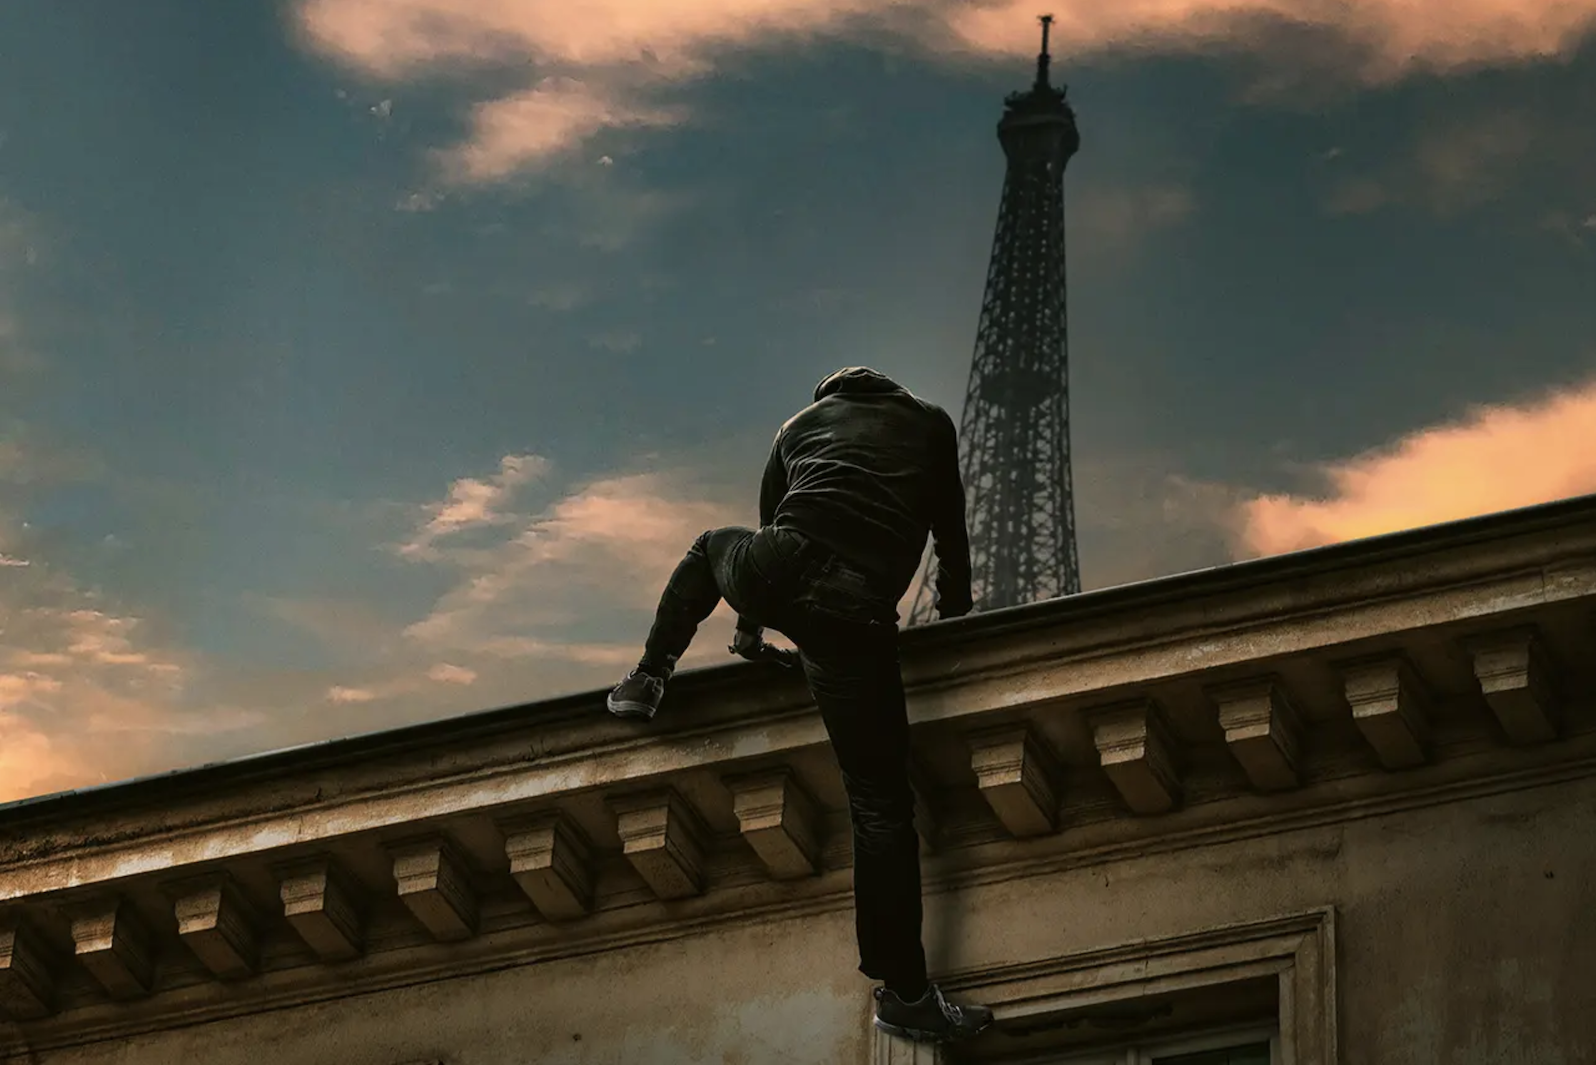 Vjeran Tomic: The Spider-Man of Paris (2023)